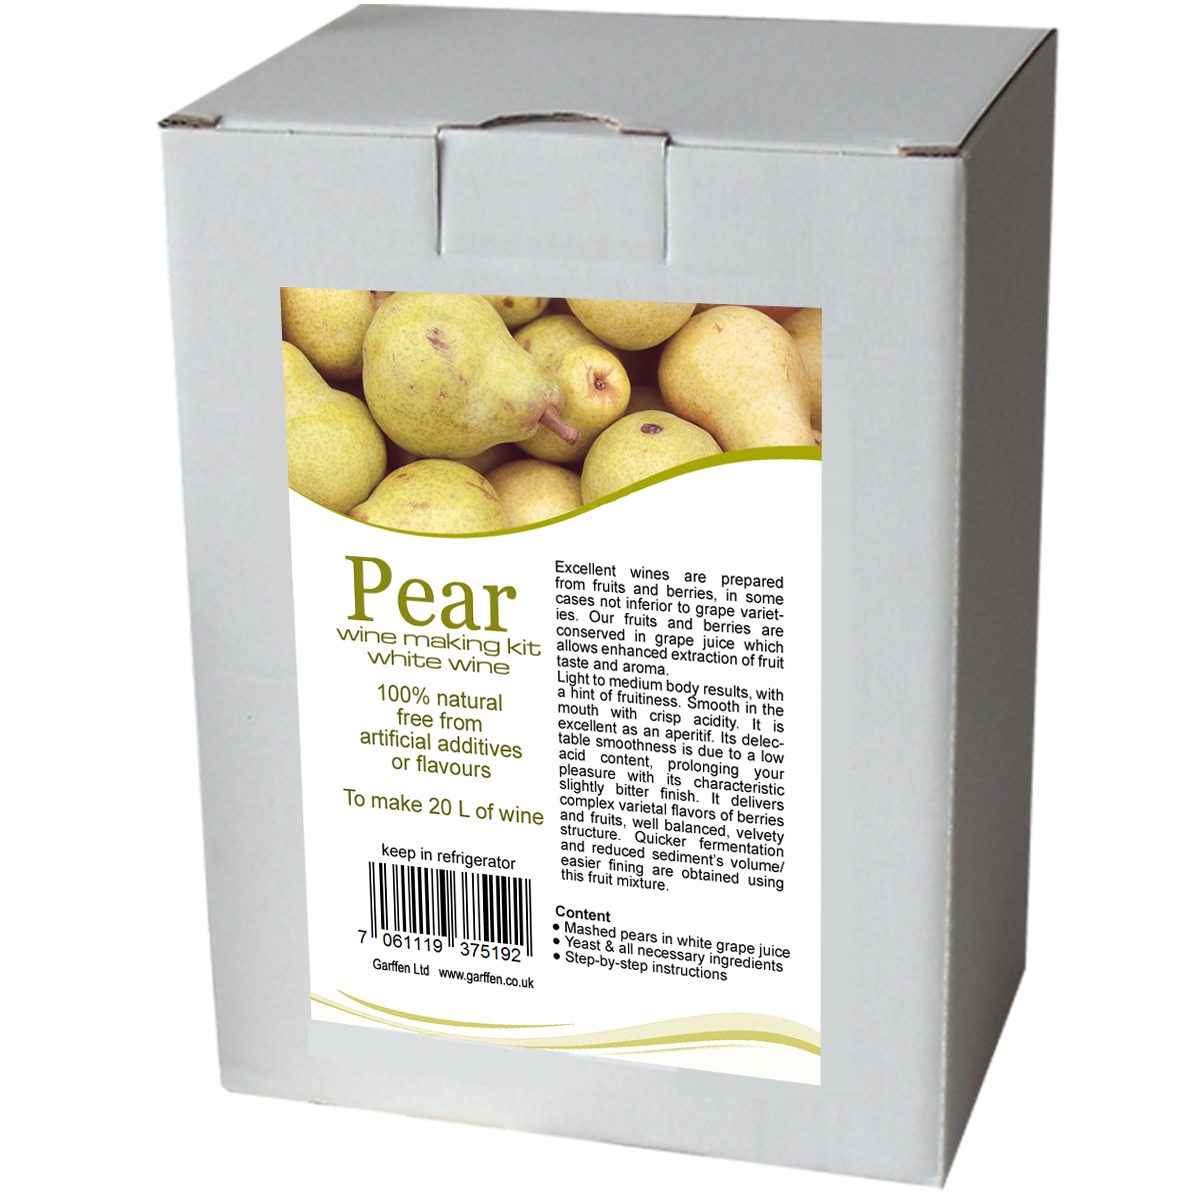 Pear wine making kit